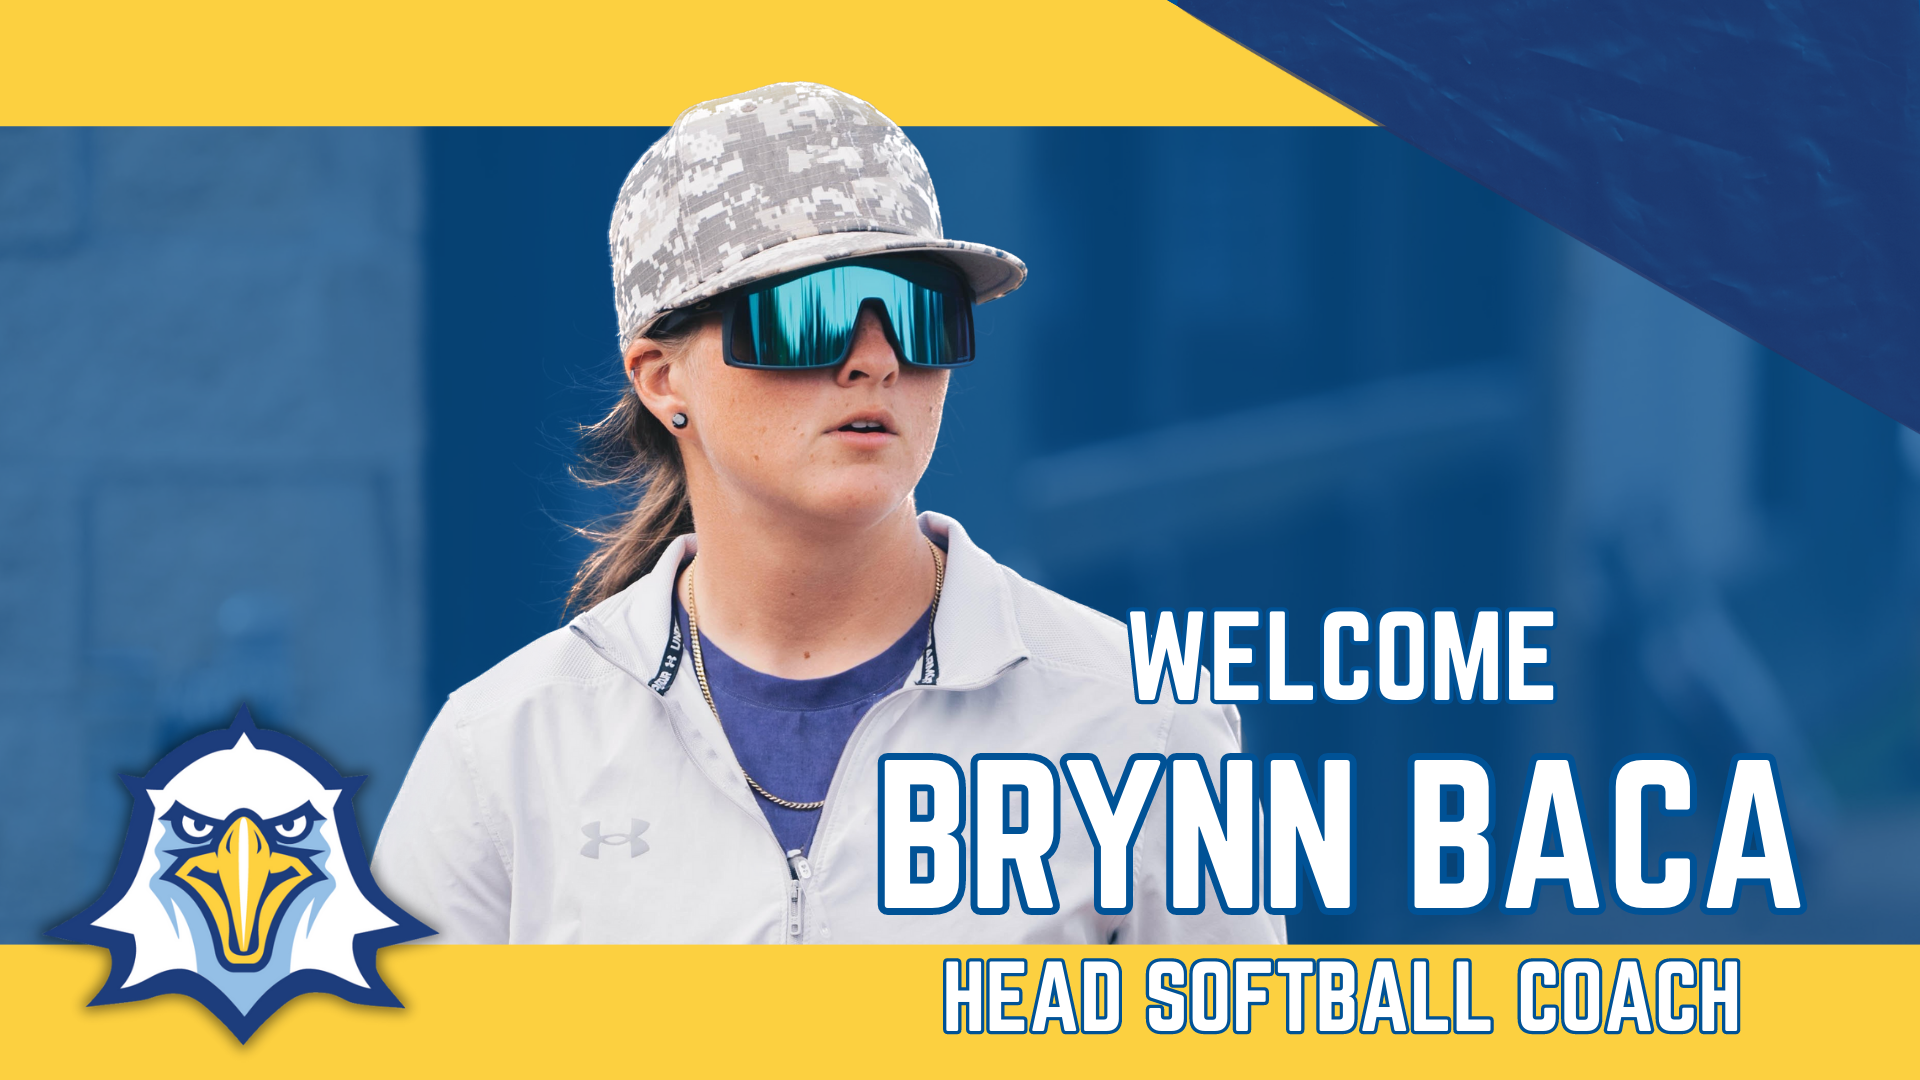 Brynn Baca named new head softball coach